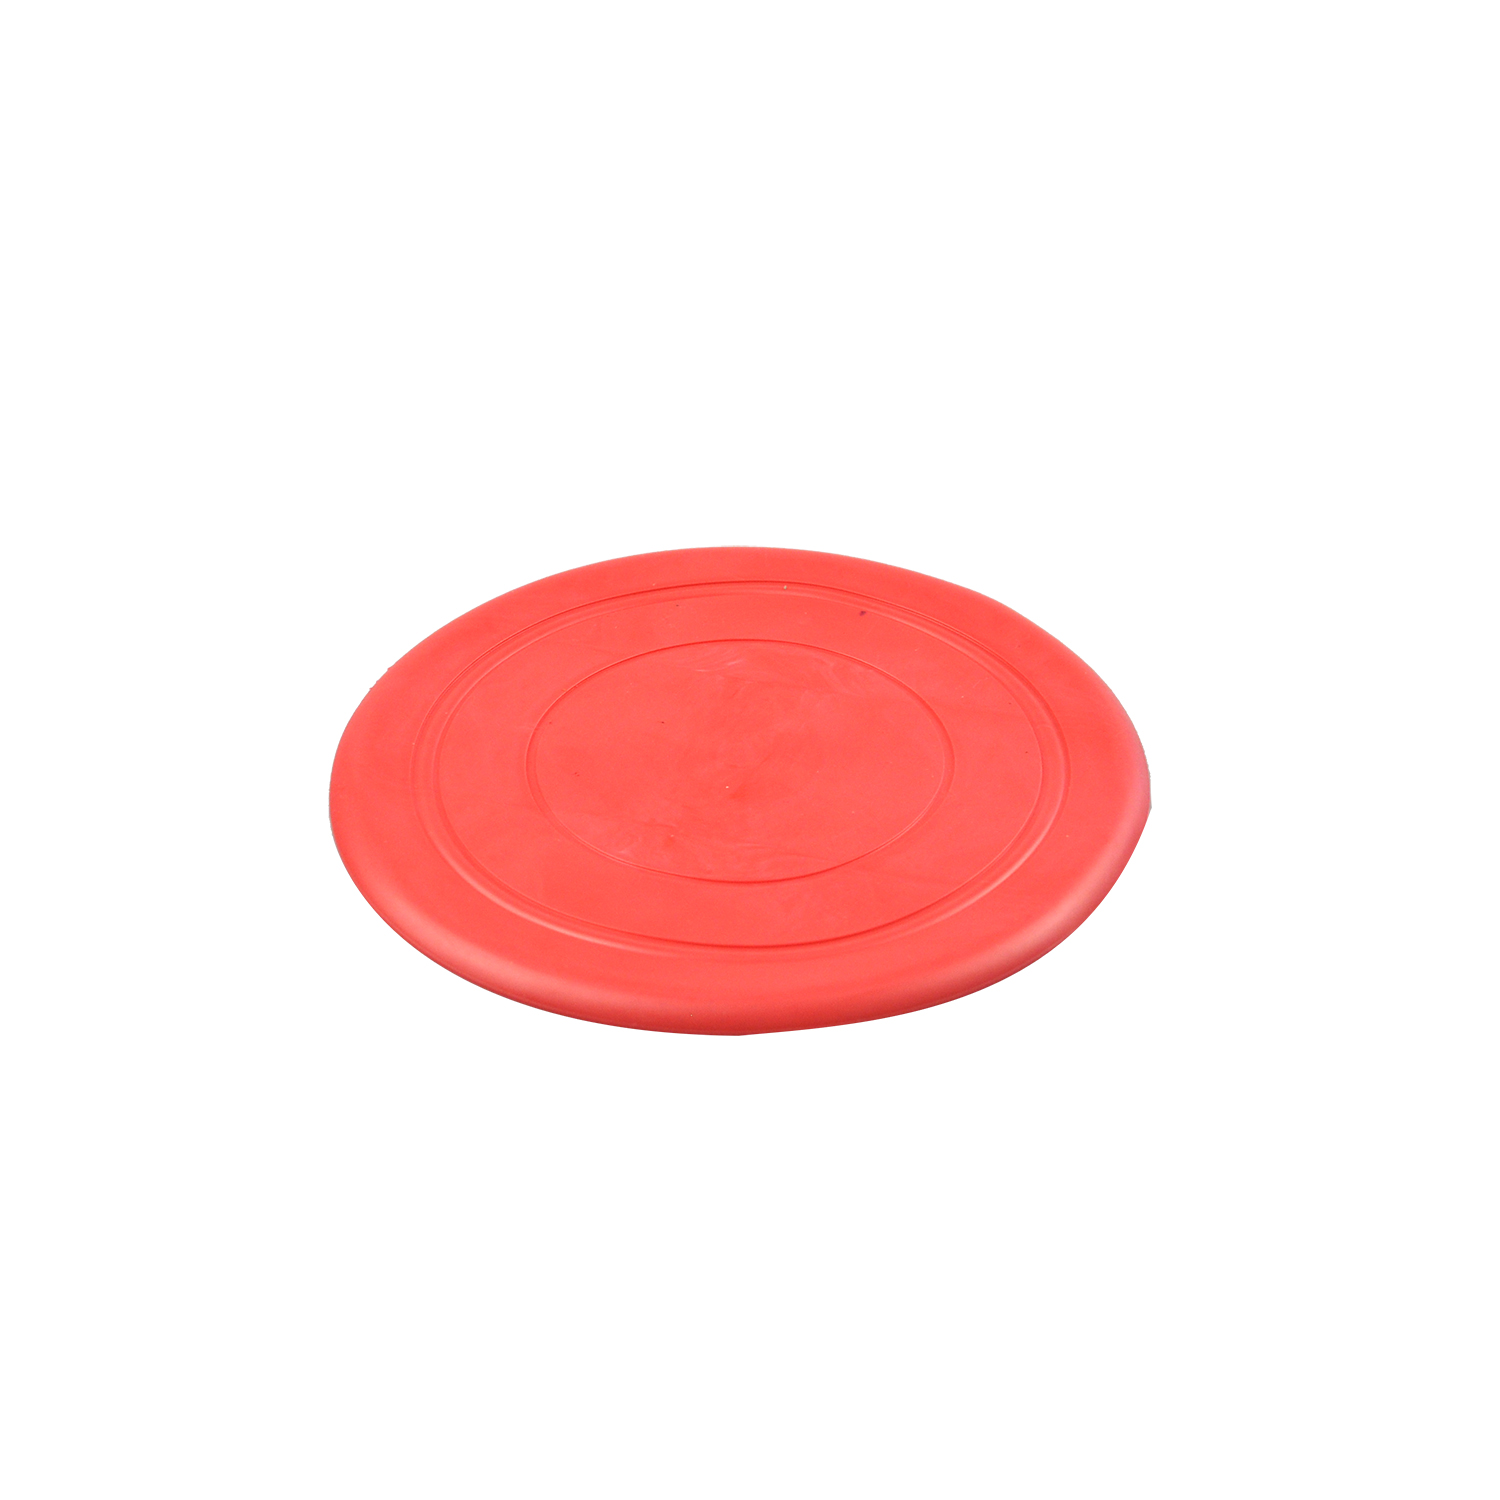 Resistant Soft Bite Cotton Dog Toy Frisbee